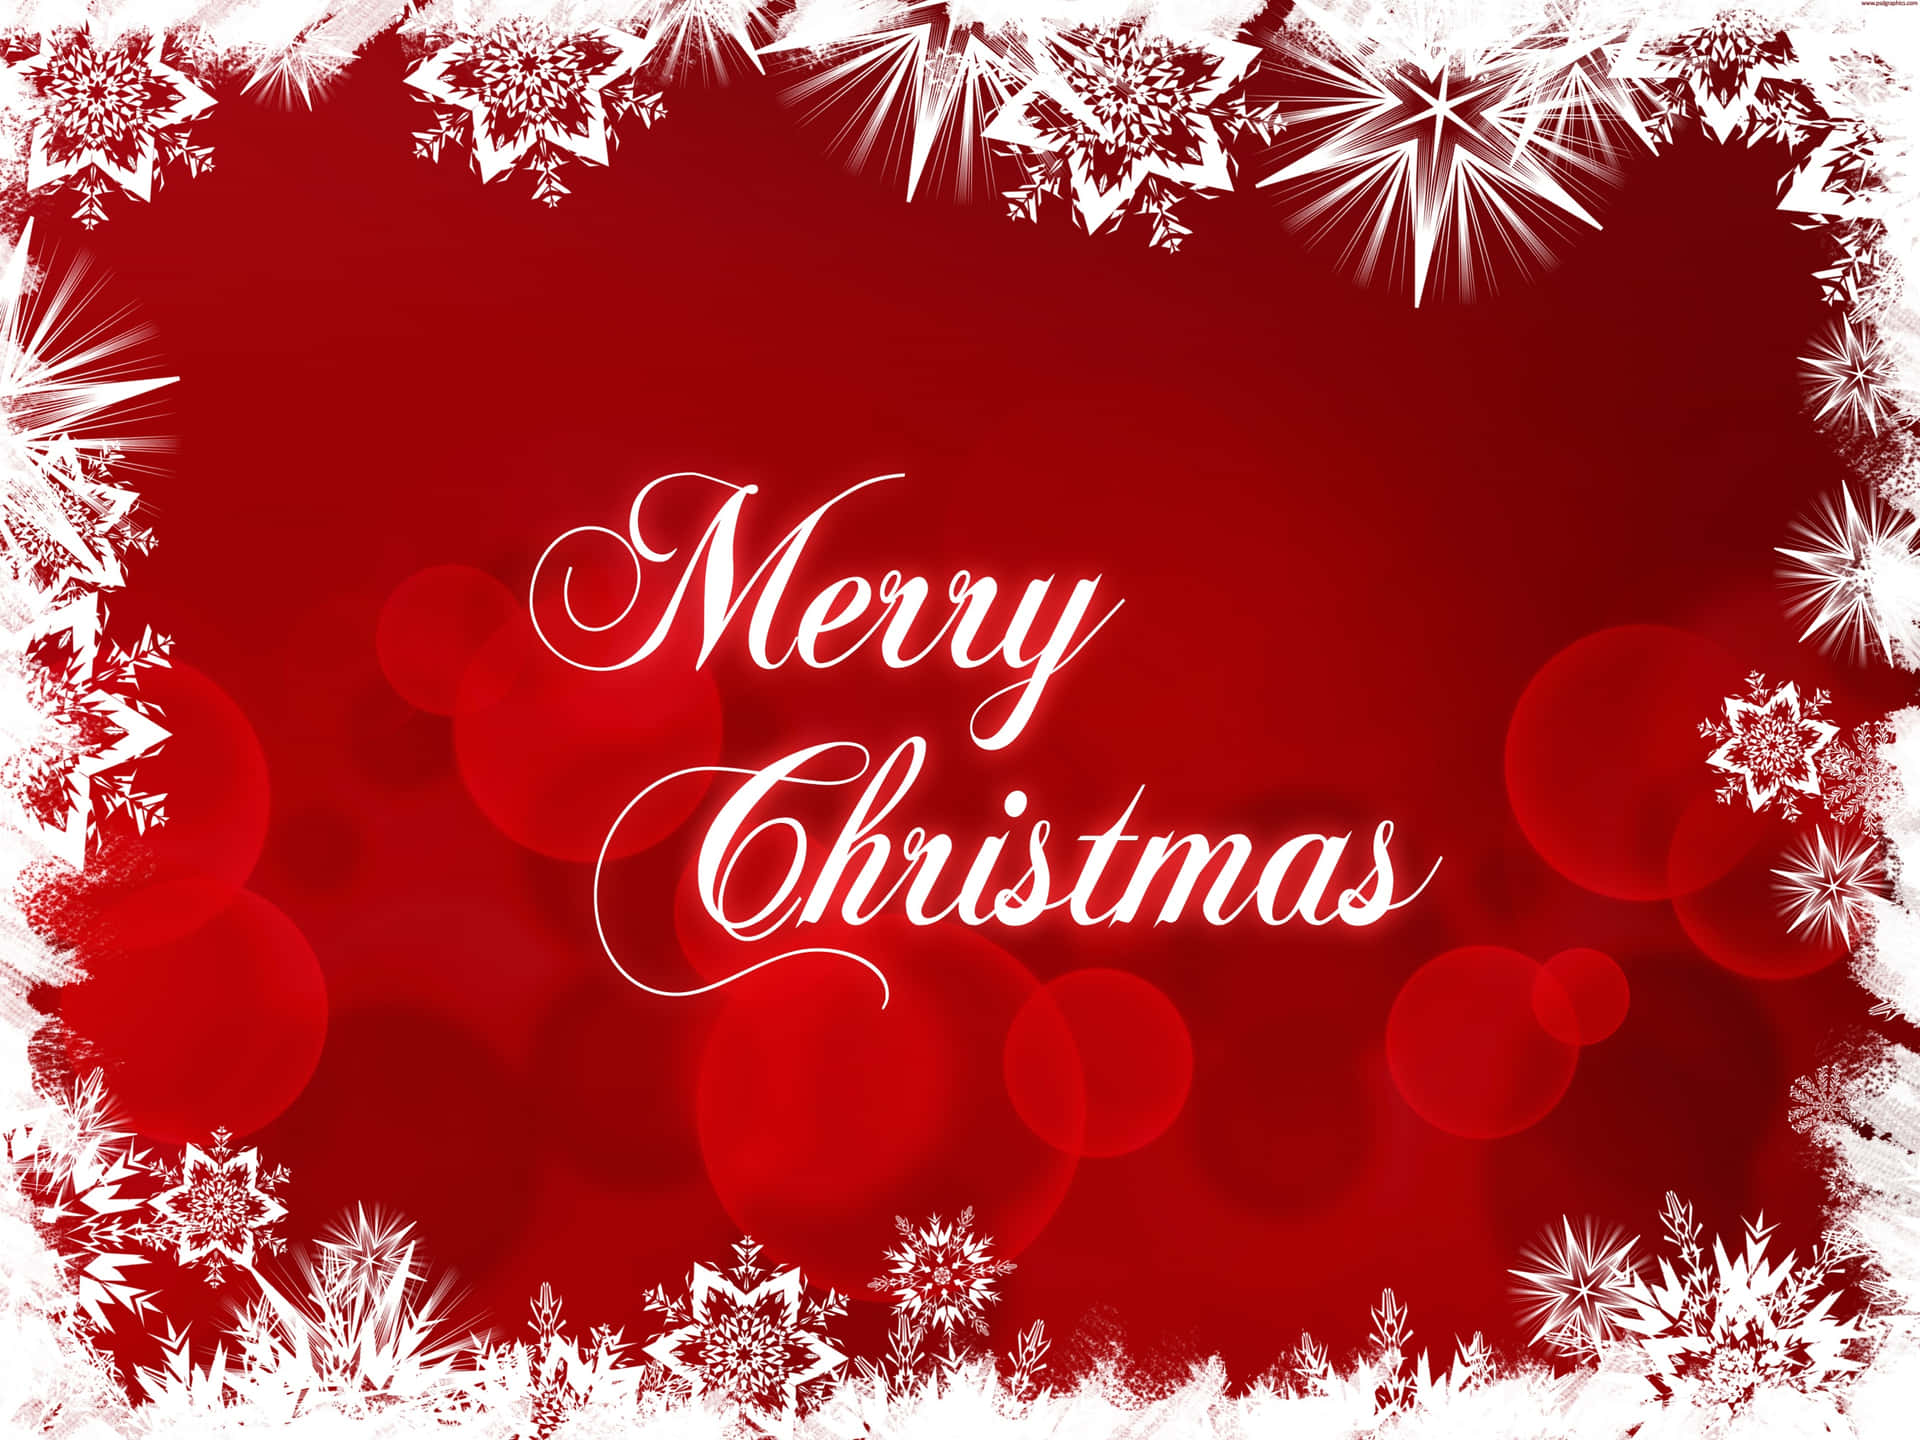 Wishing you a Merry Christmas!